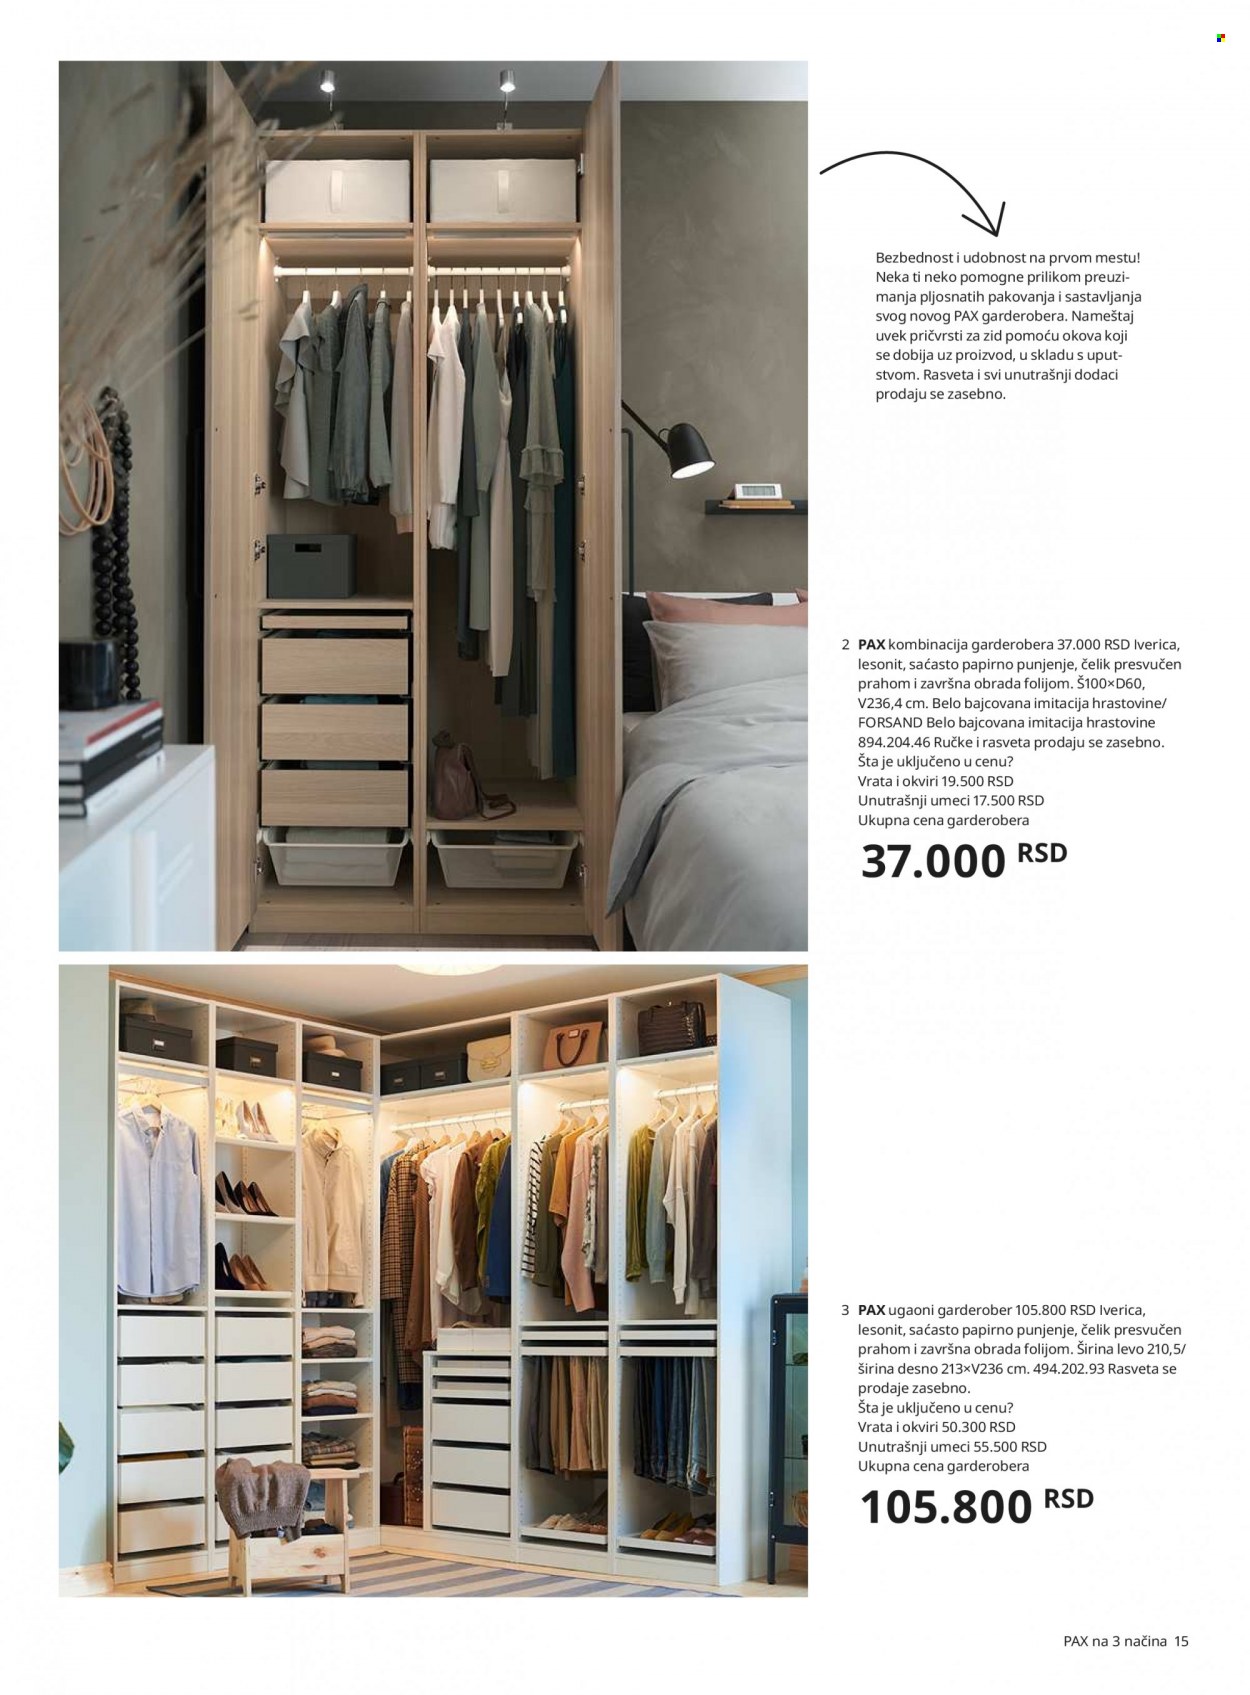 thumbnail - IKEA katalog - Proizvodi na akciji - ogledalo, Pax, garderober, cipele. Stranica 15.